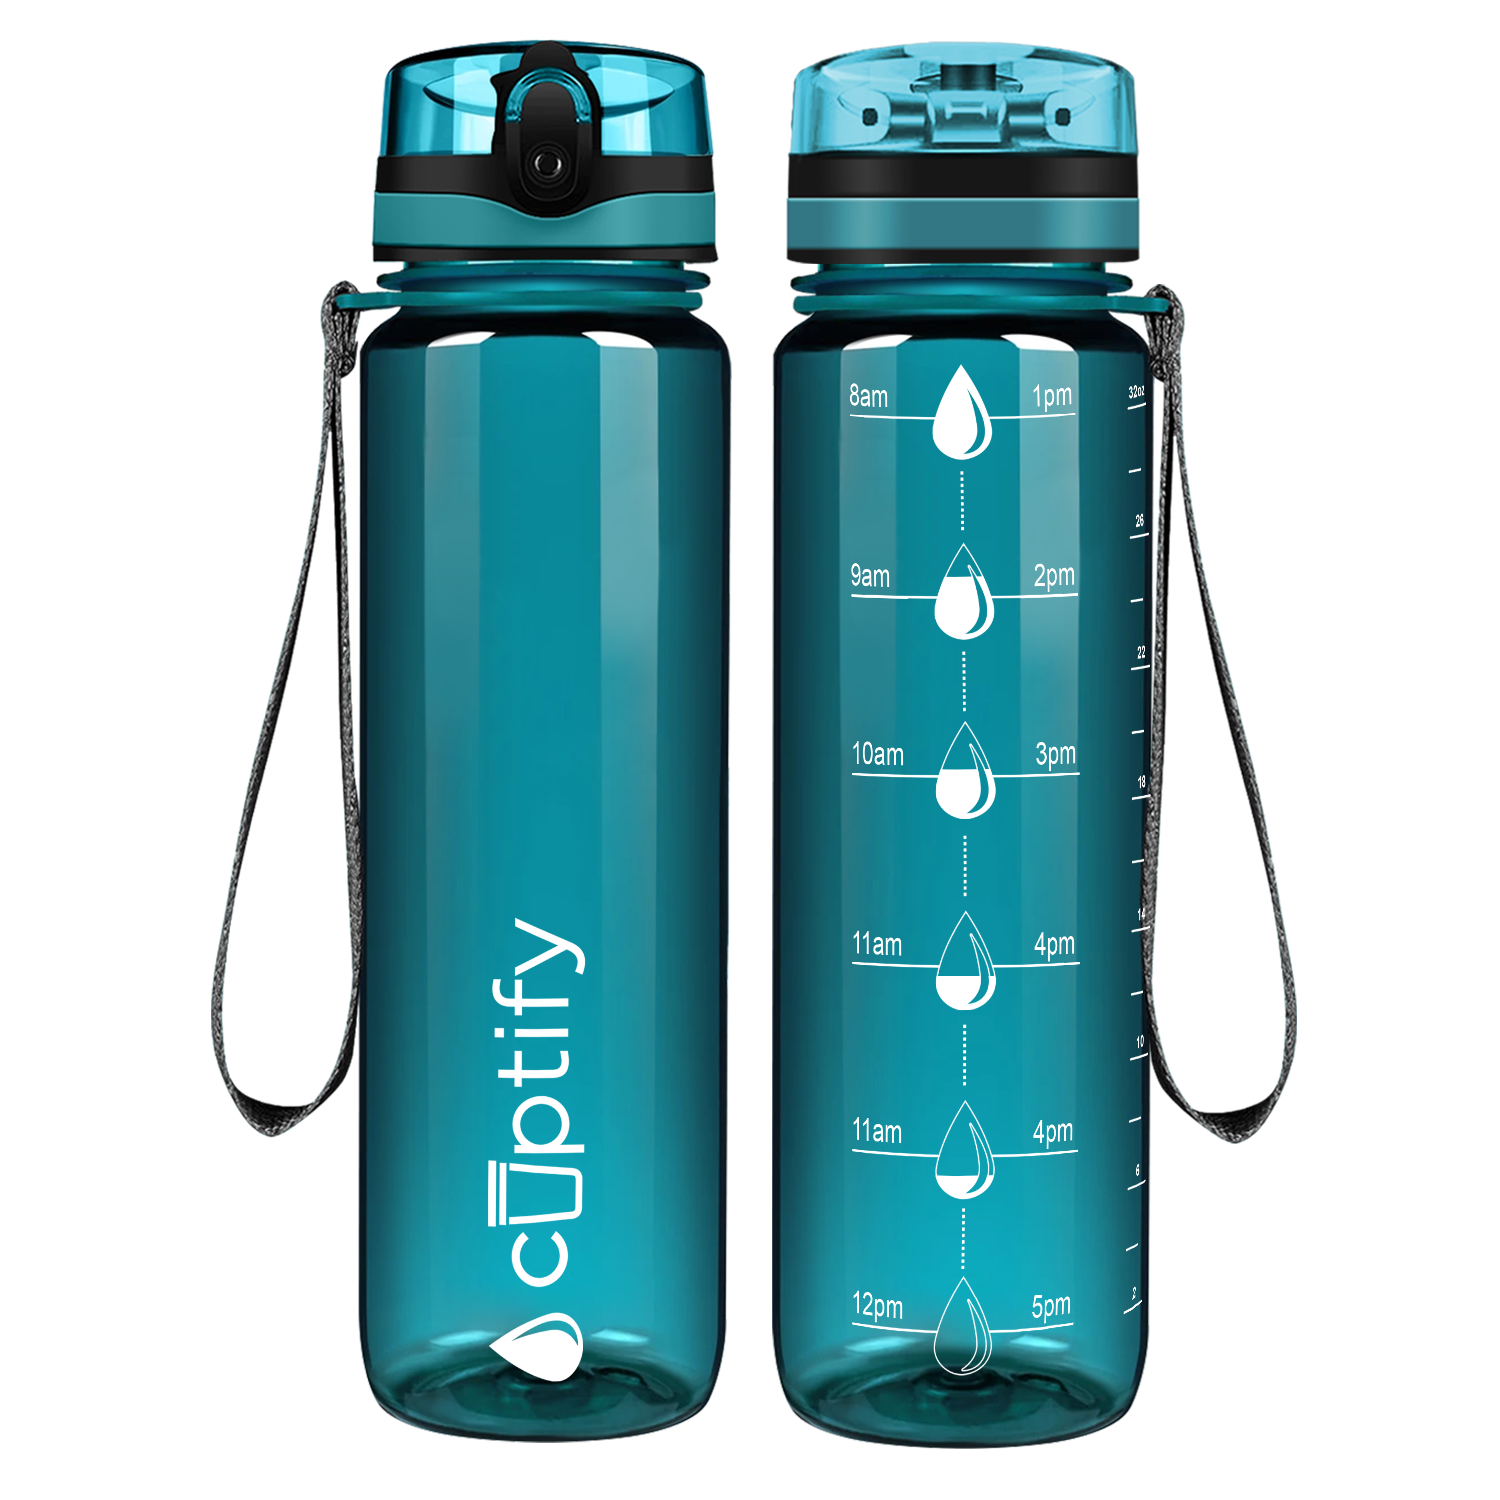 Cuptify Aqua Water Bottle